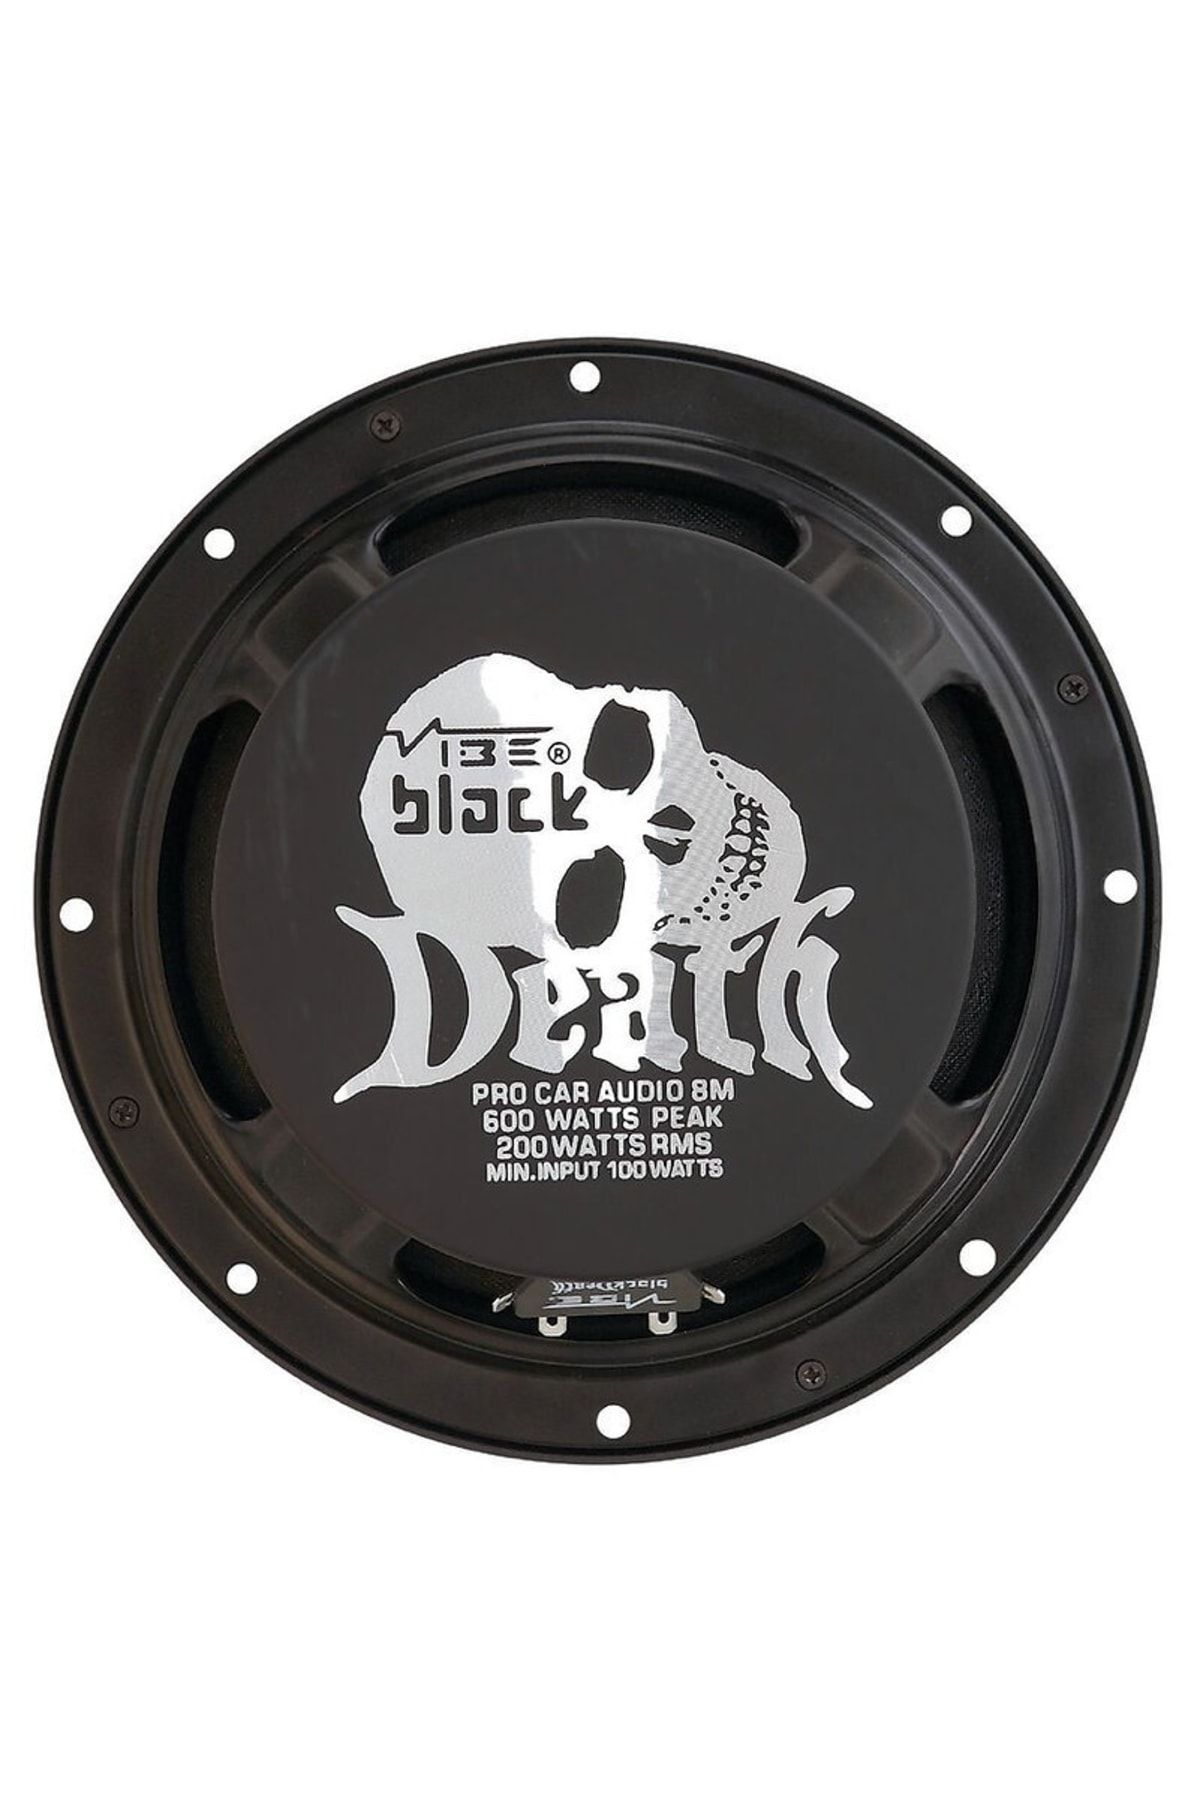 Vibe 20. Автомобильная акустика Vibe BLACKDEATH Pro 8m. Vibe bdpro8m динамики. Автомобильная акустика Vibe BLACKDEATH Pro 12. Колонки Vibe Black Death BQ 96.